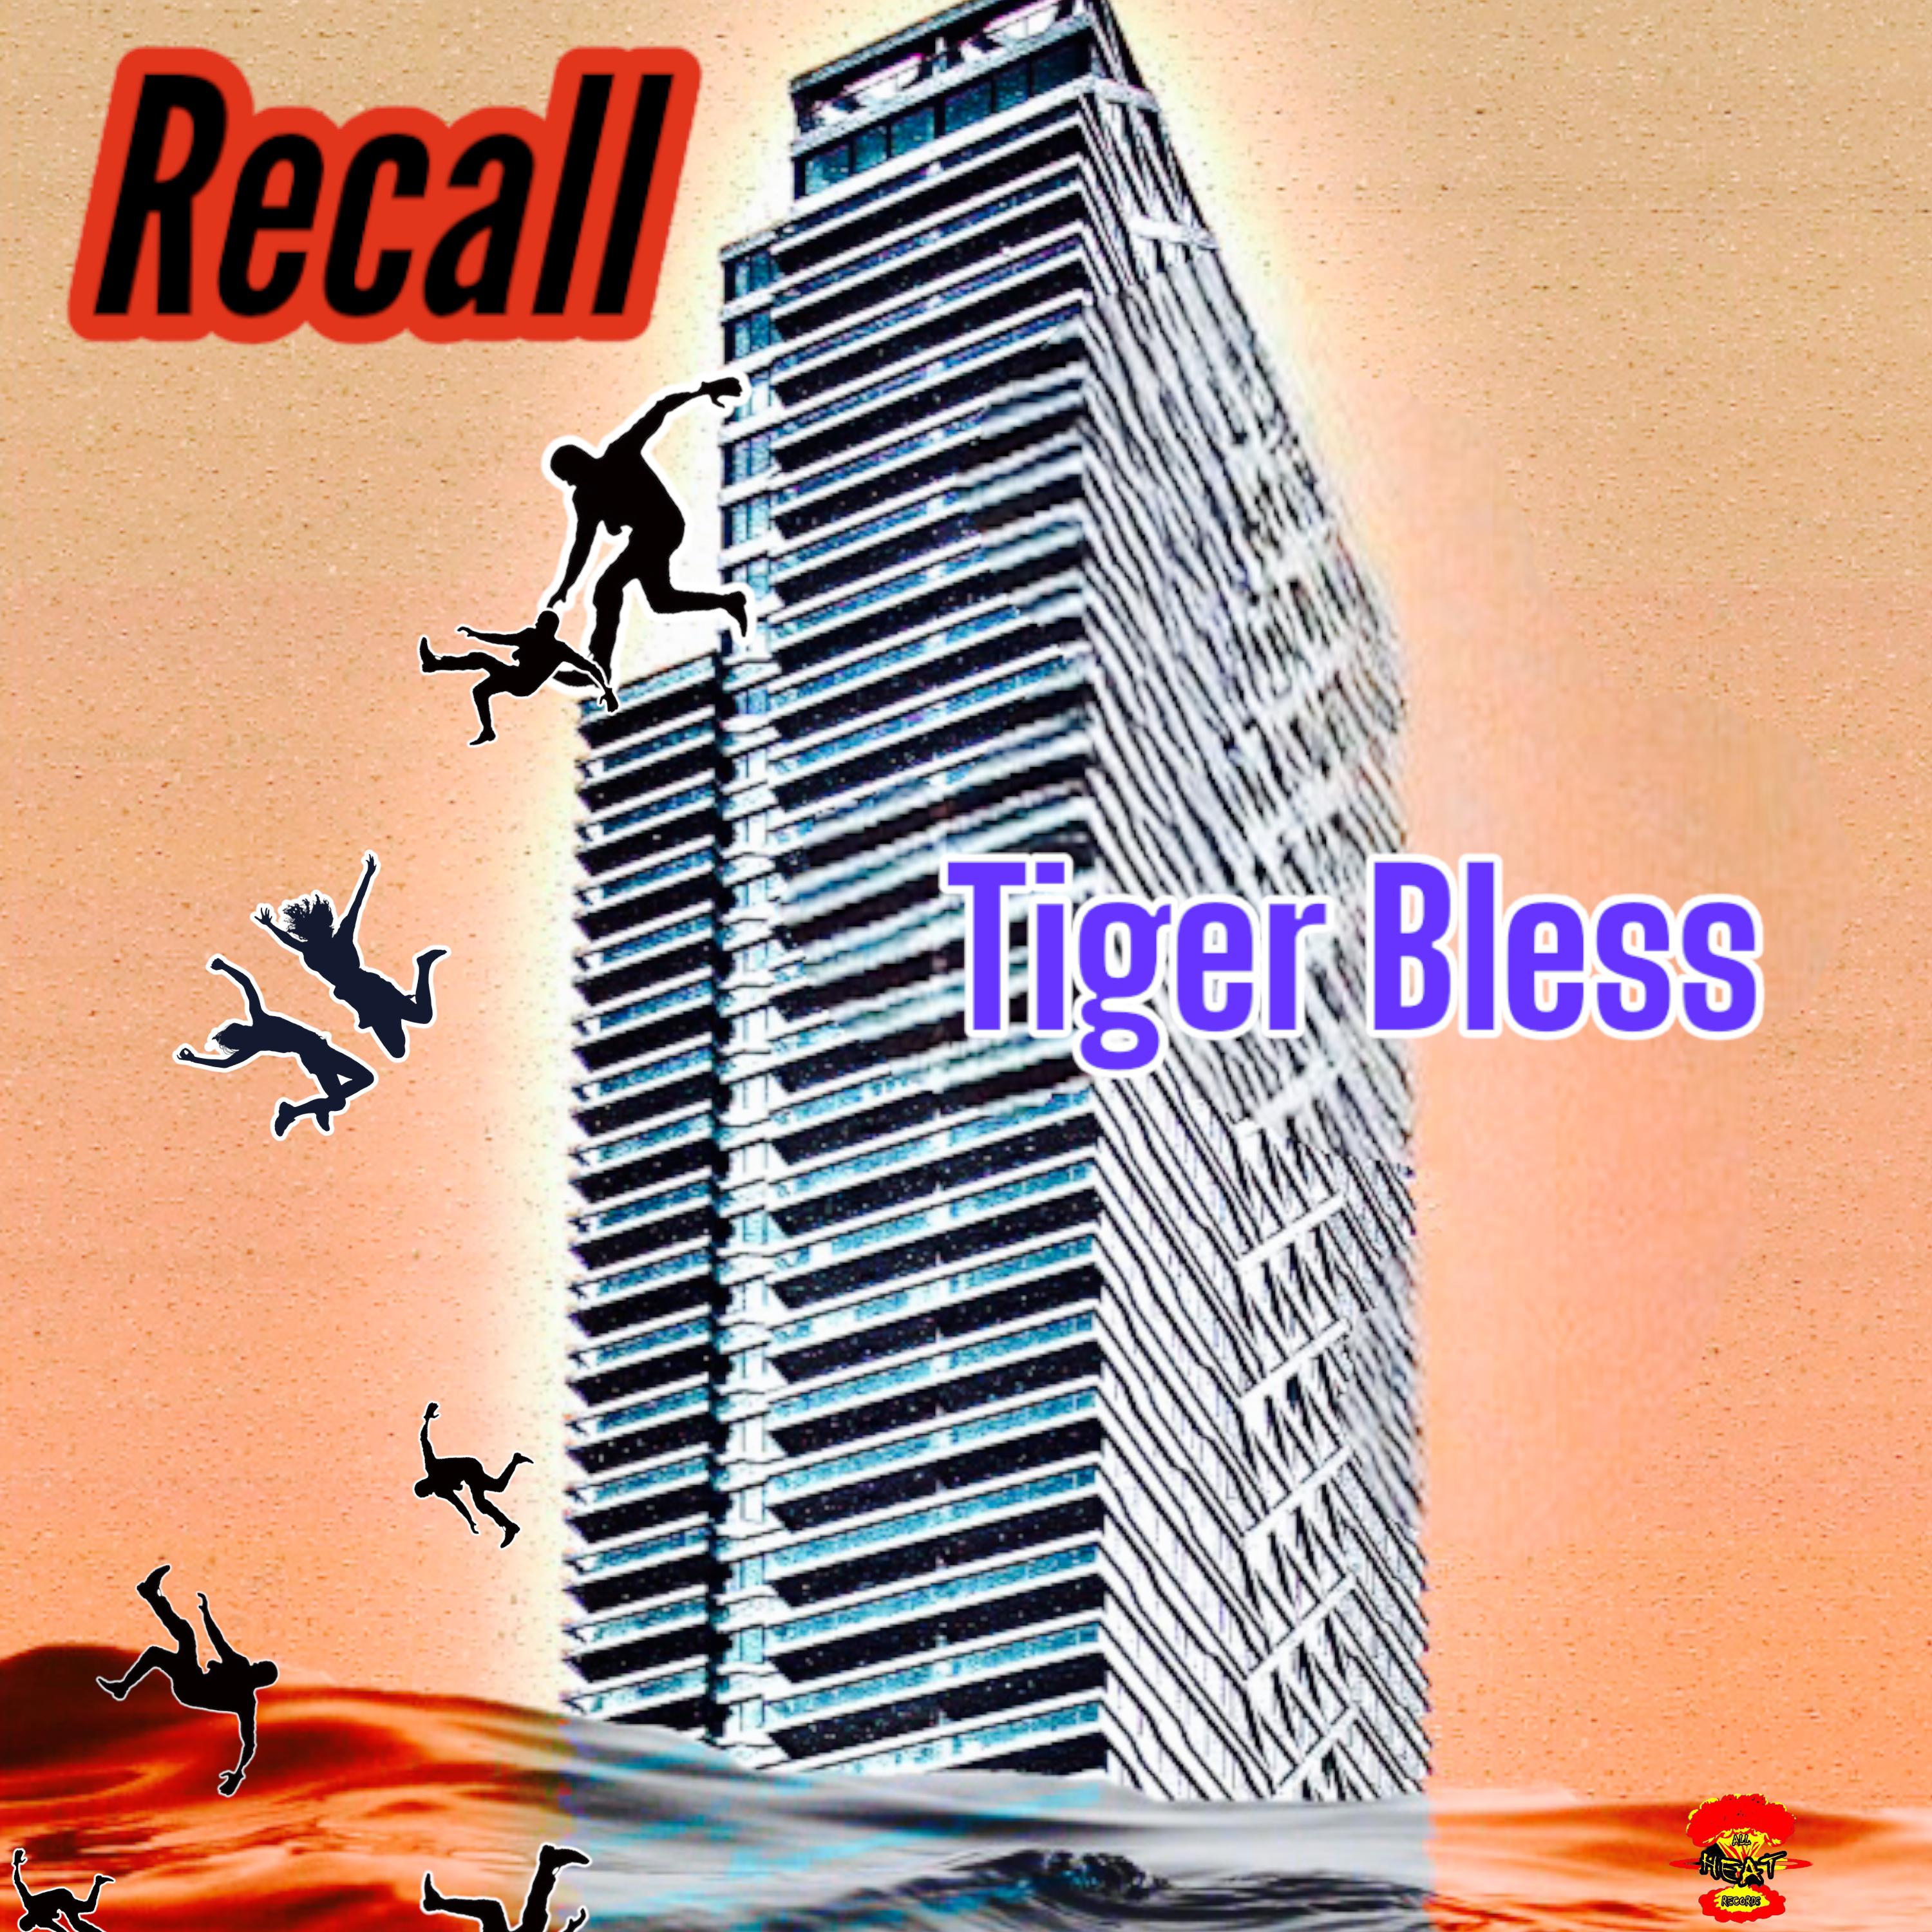 Tiger Bless - Recall